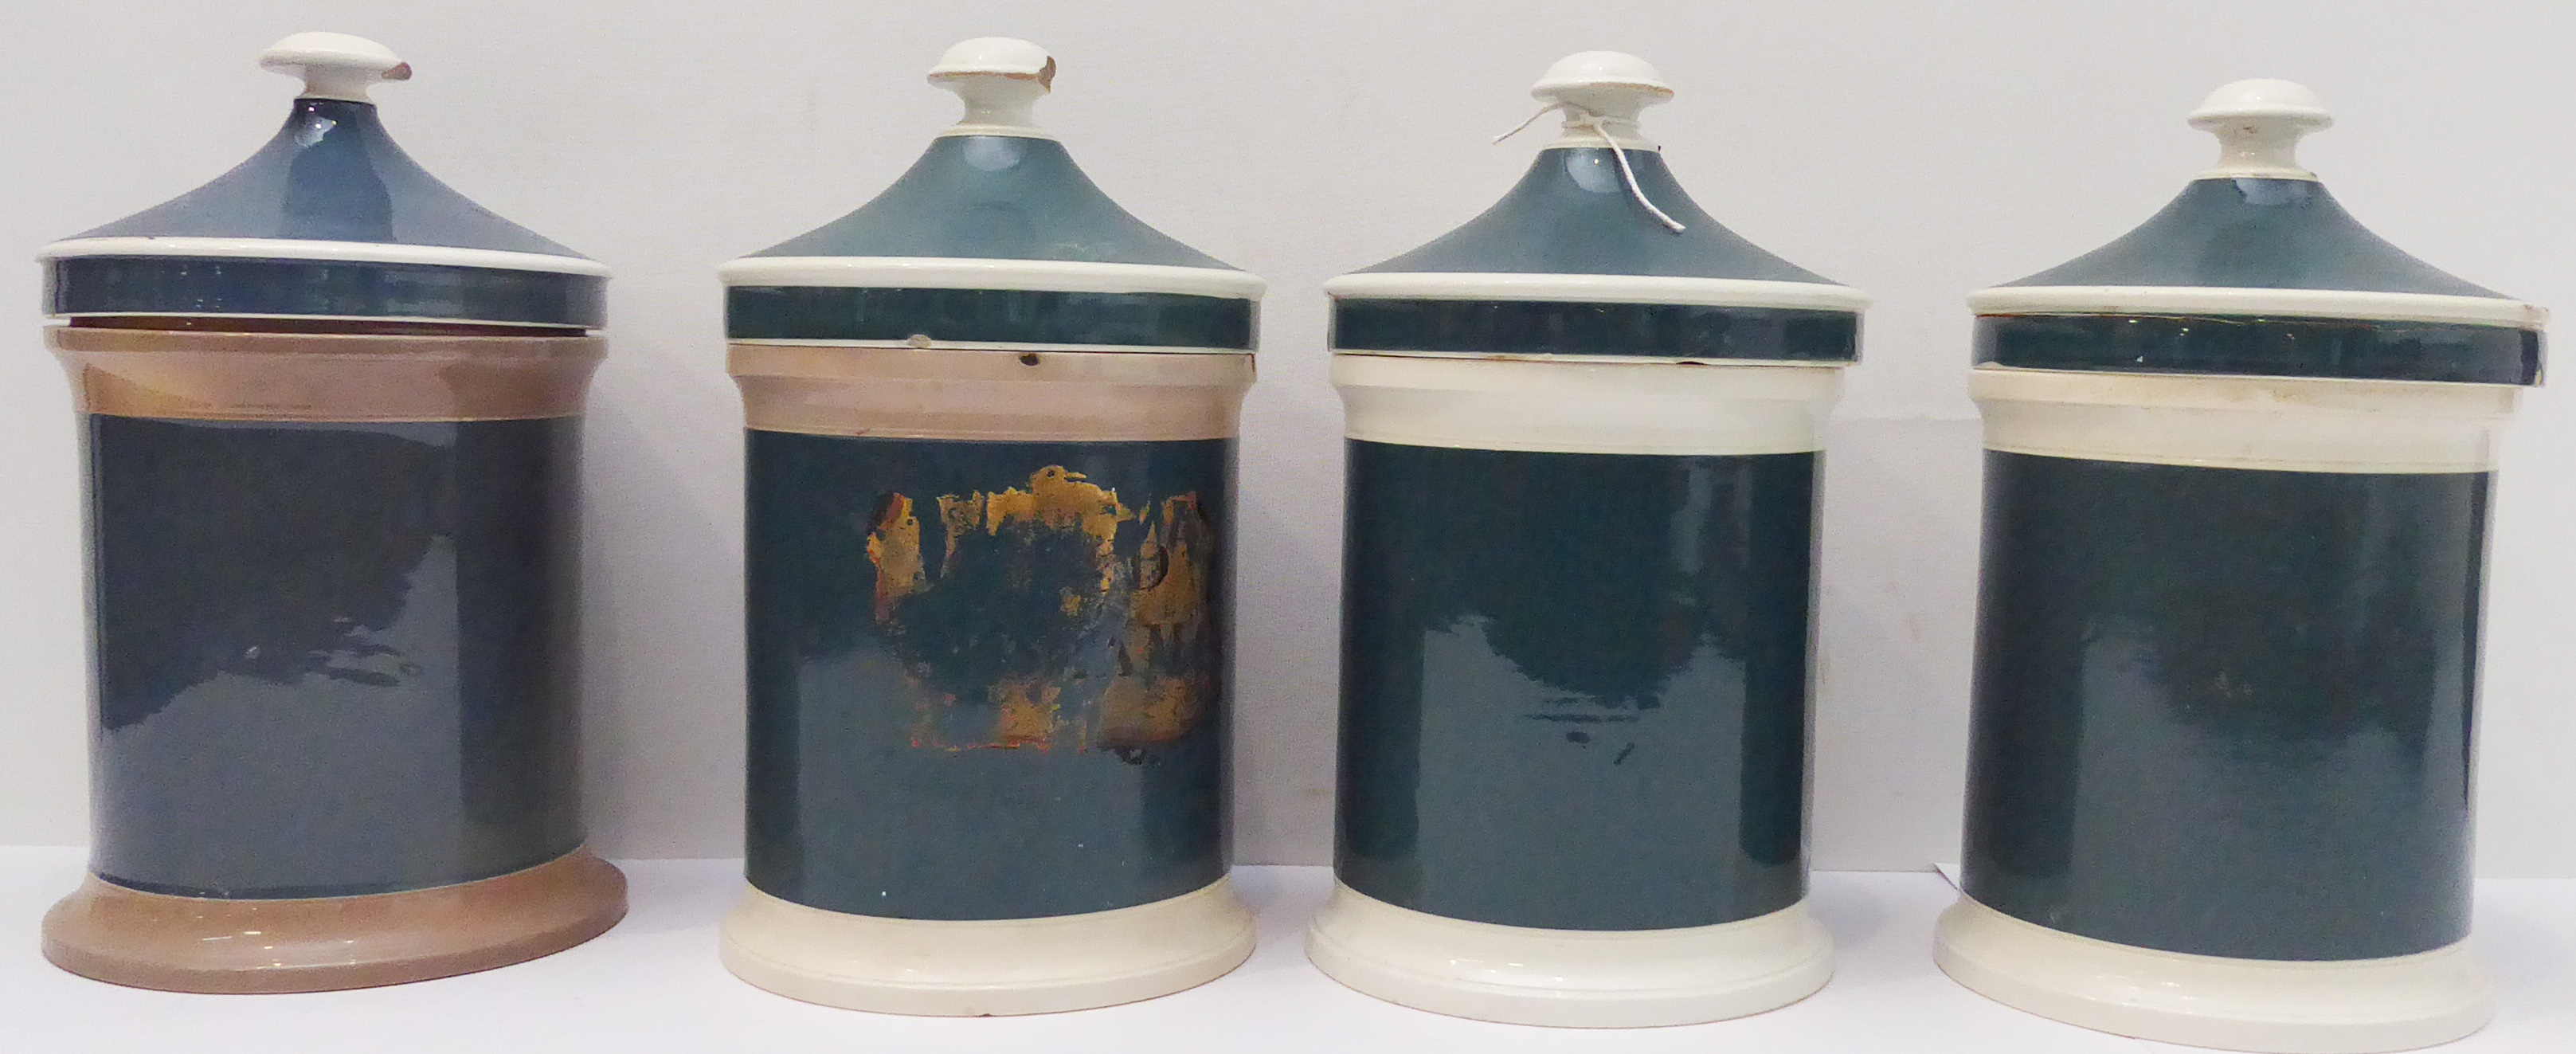 Four Victorian pottery drug jars with lids (28 cm high including lids)